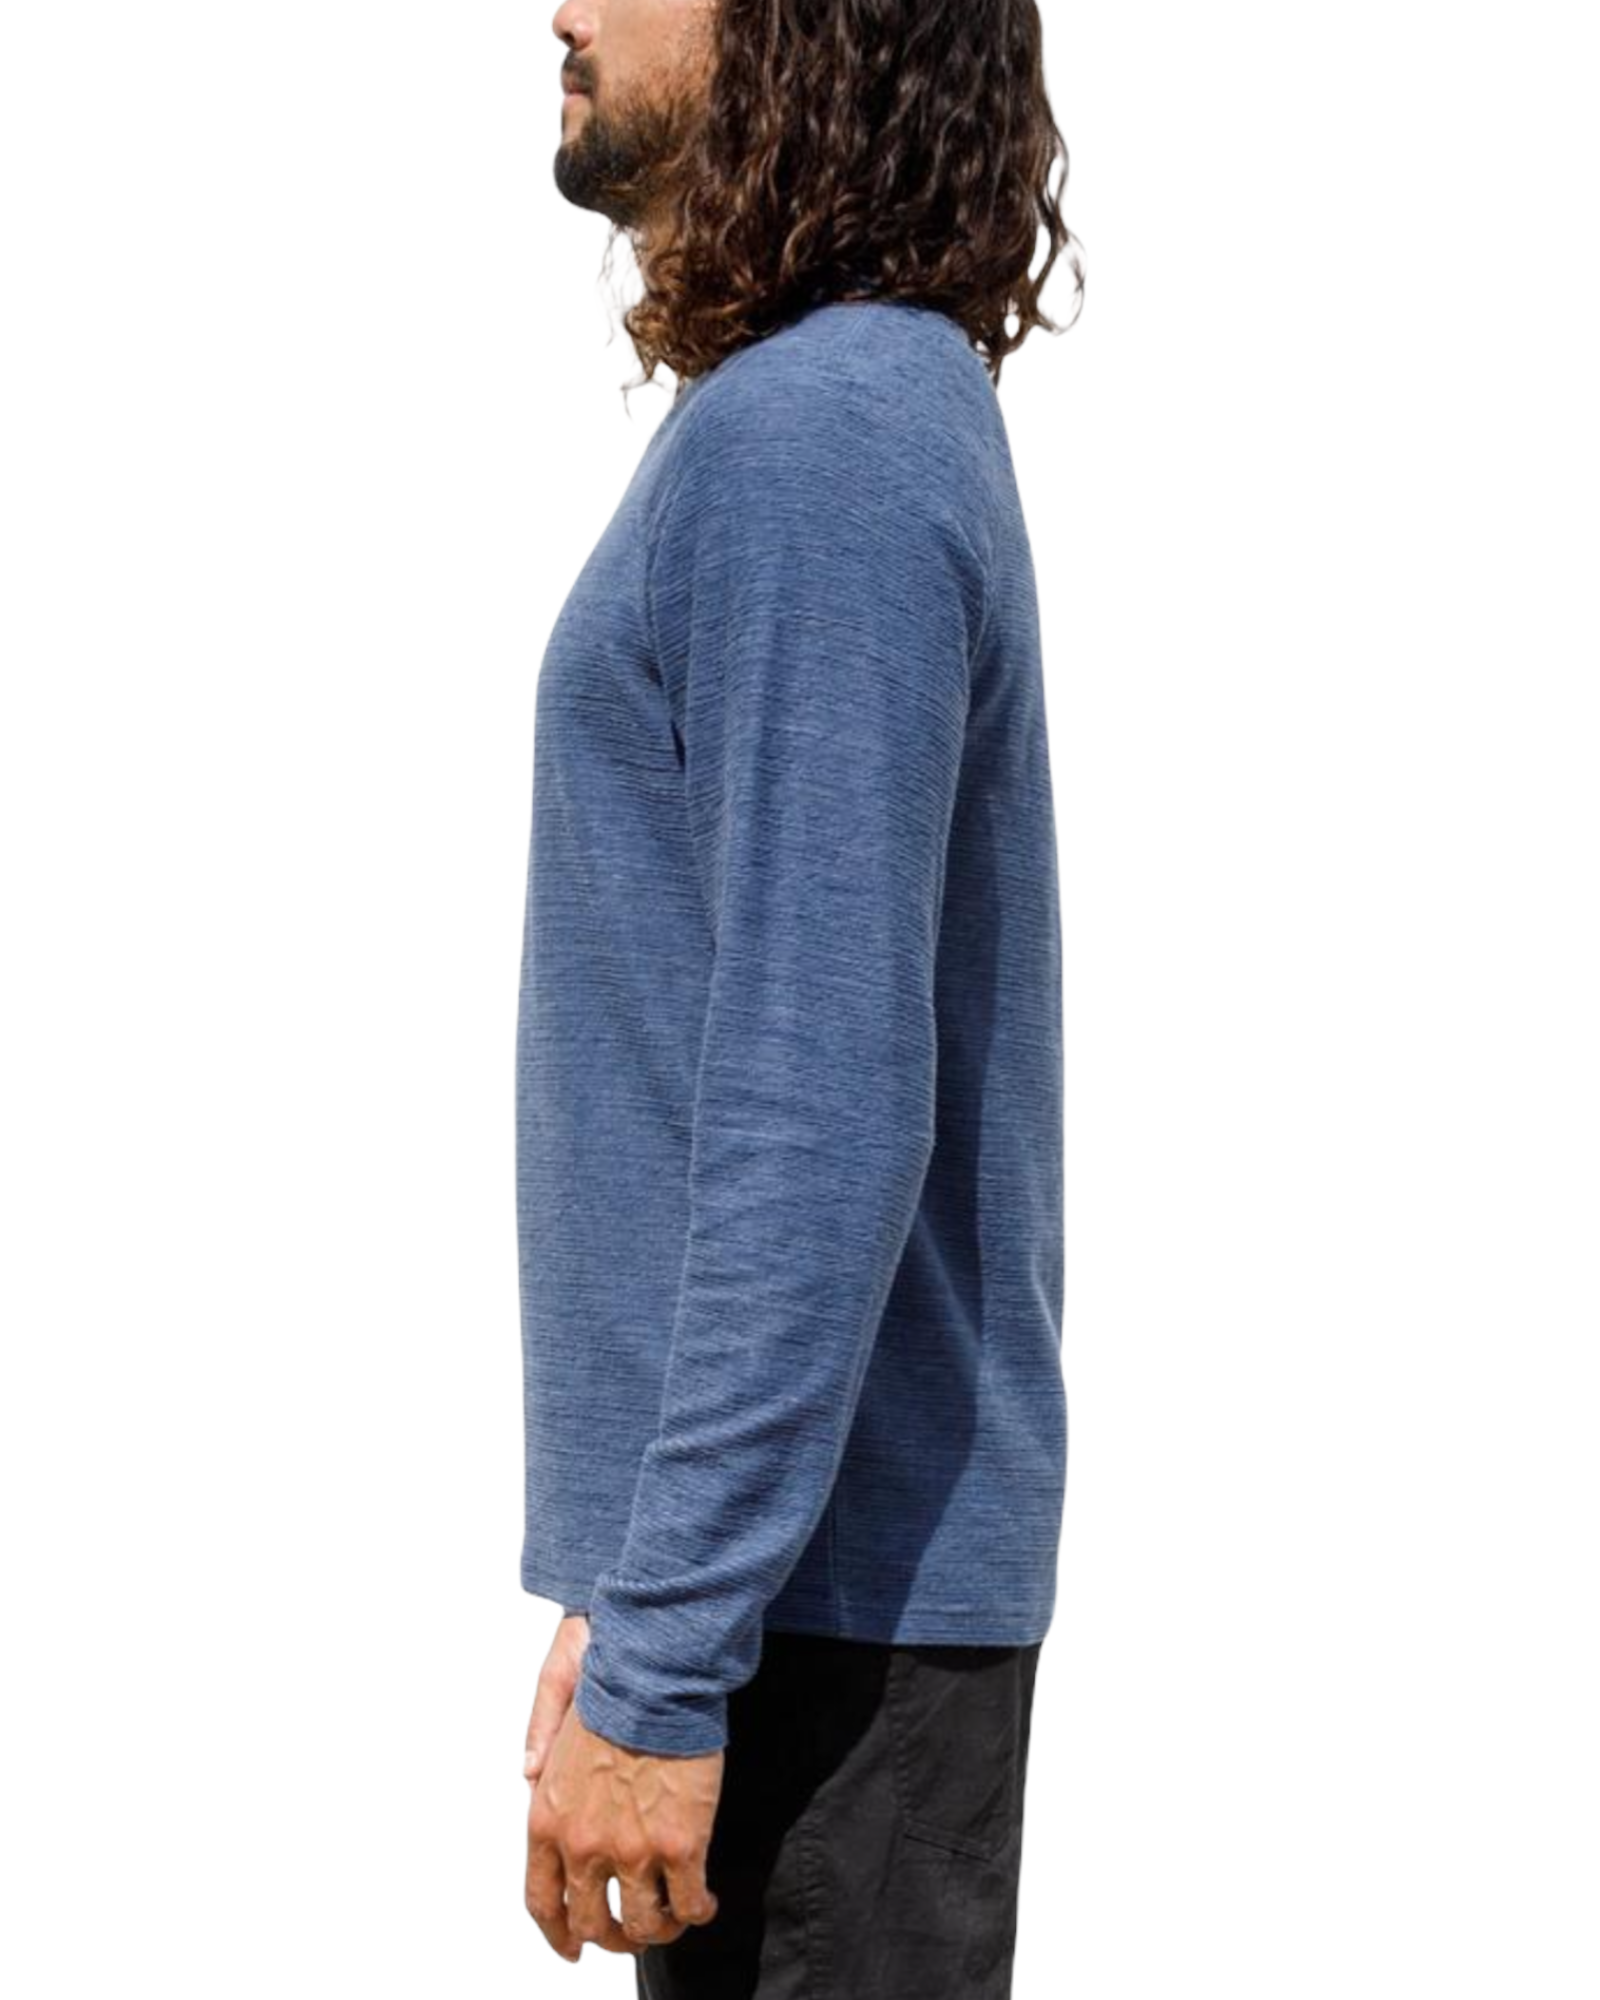 Tentree M’s Space Dye Ottoman Longsleeve Shirt (Midnight Blue).